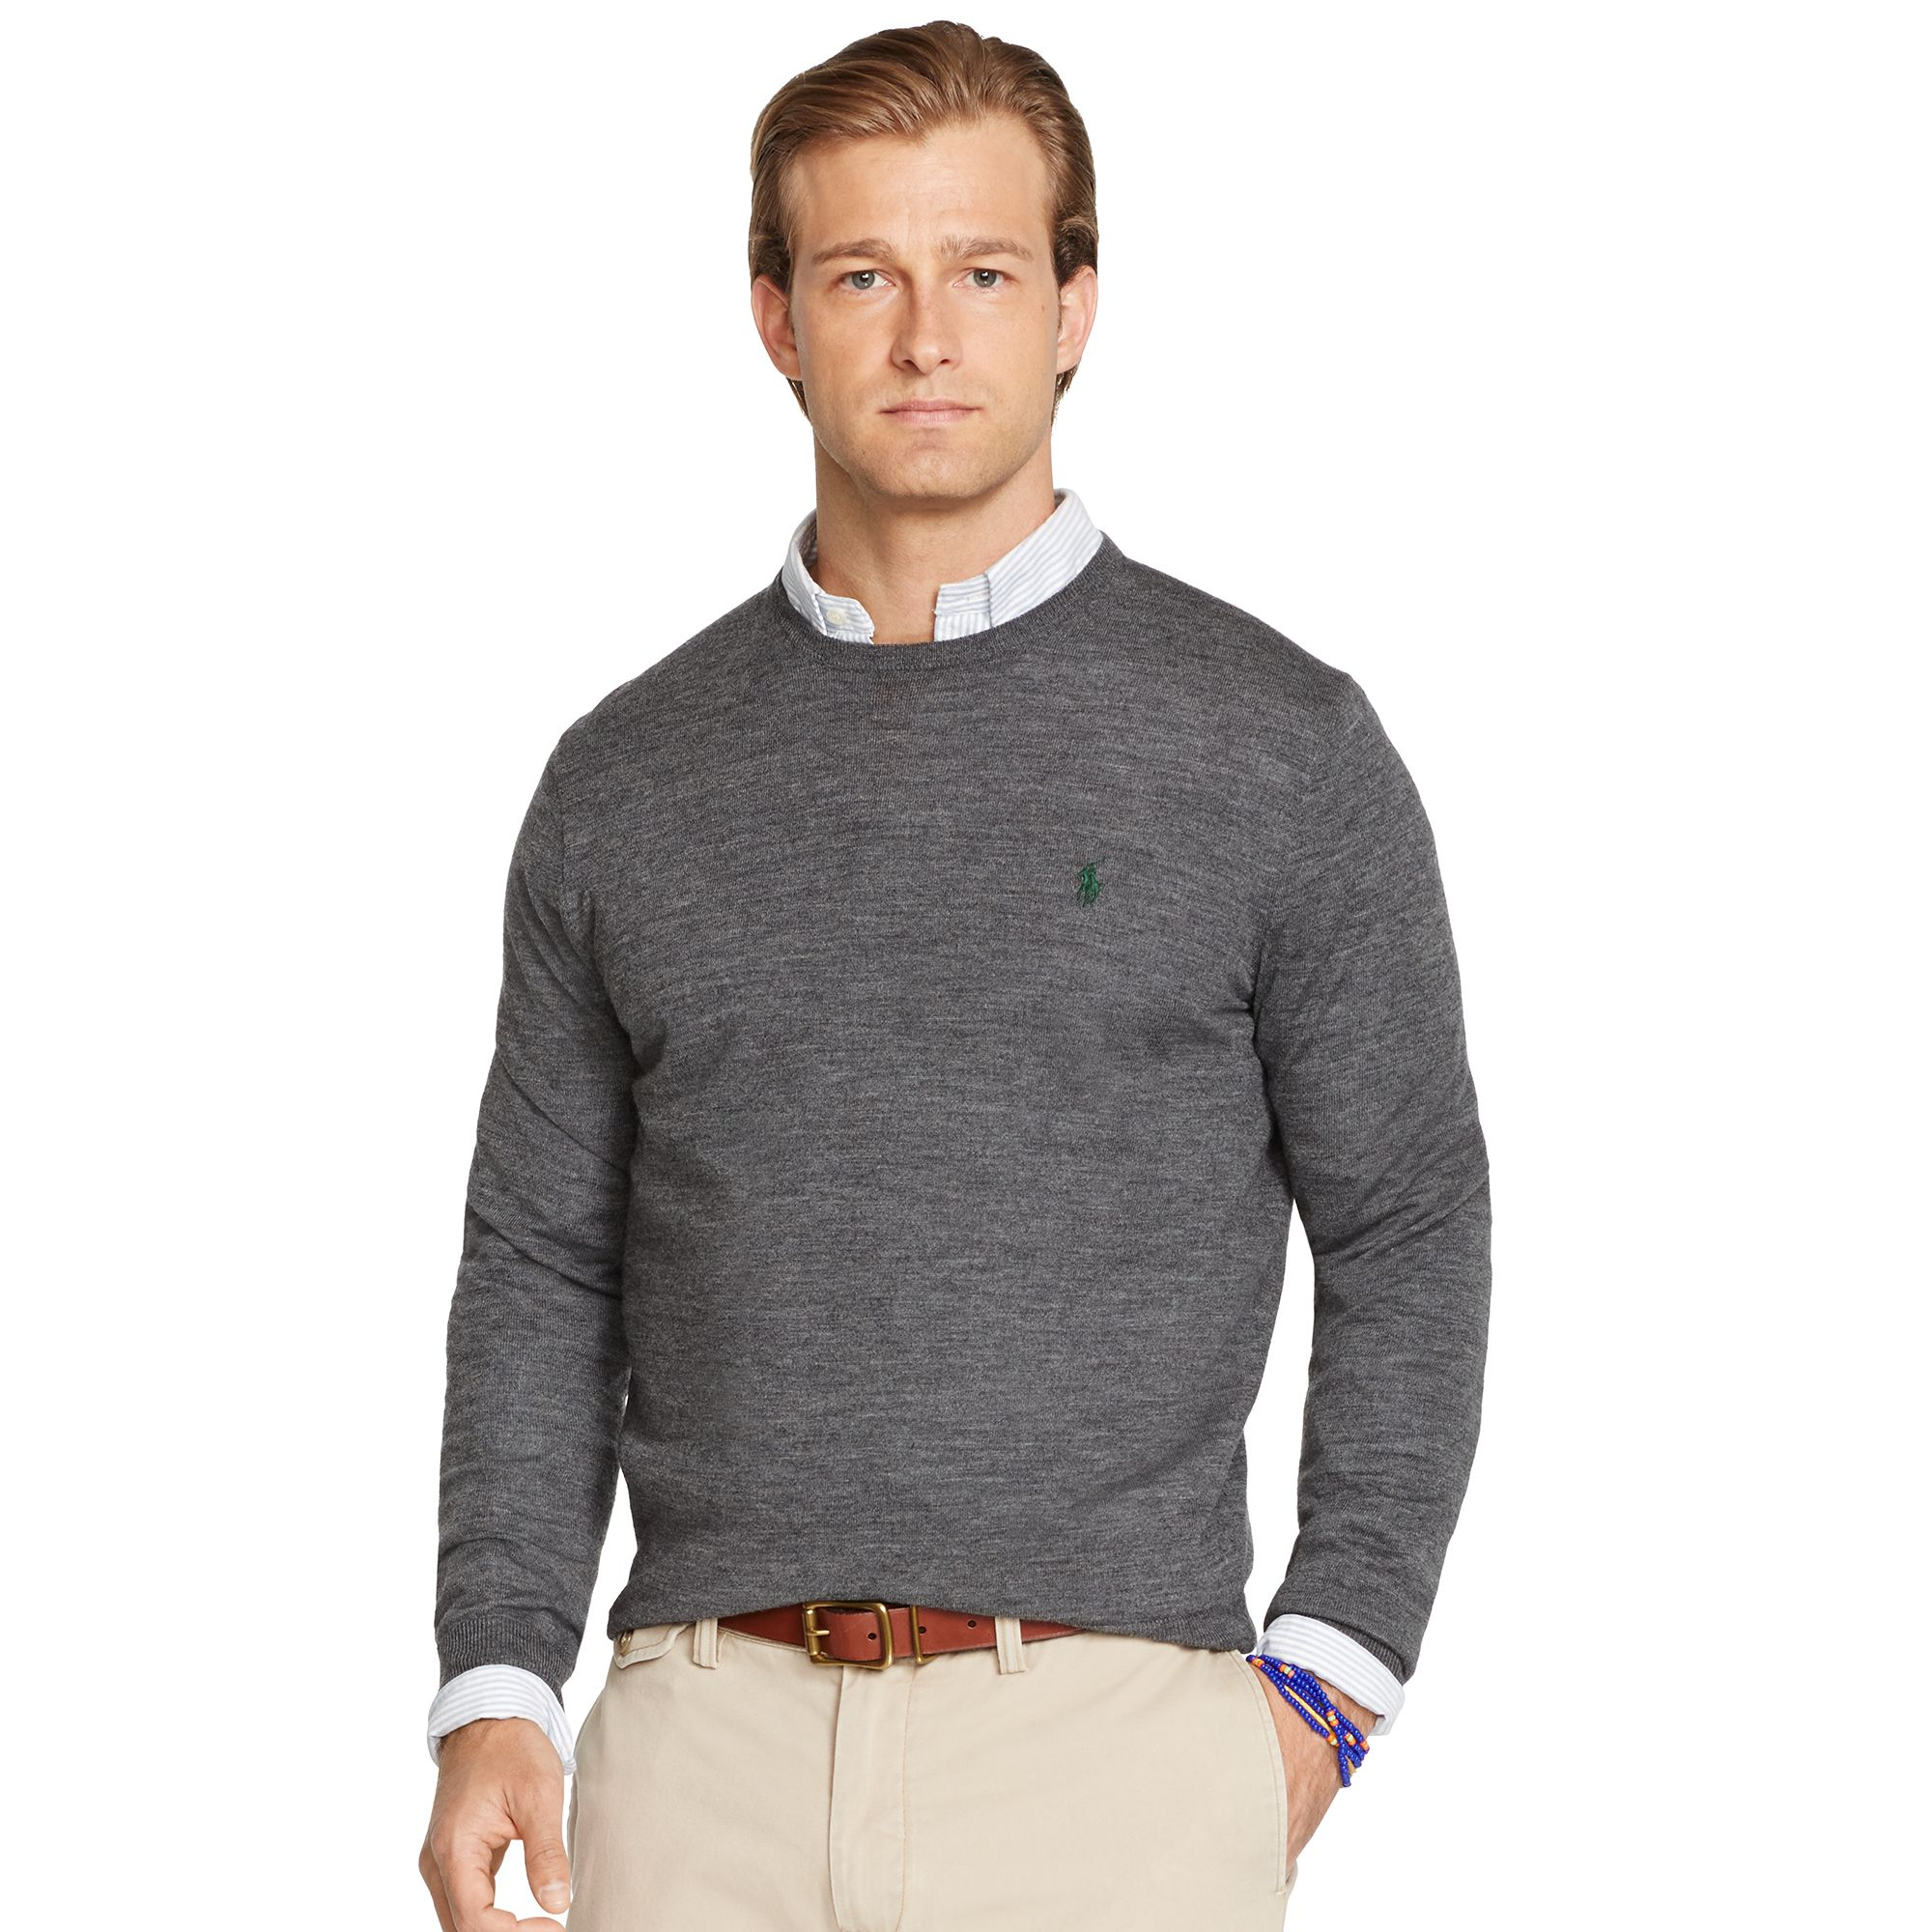 Lyst - Polo Ralph Lauren Slim-Fit Merino Wool Sweater in Gray for Men